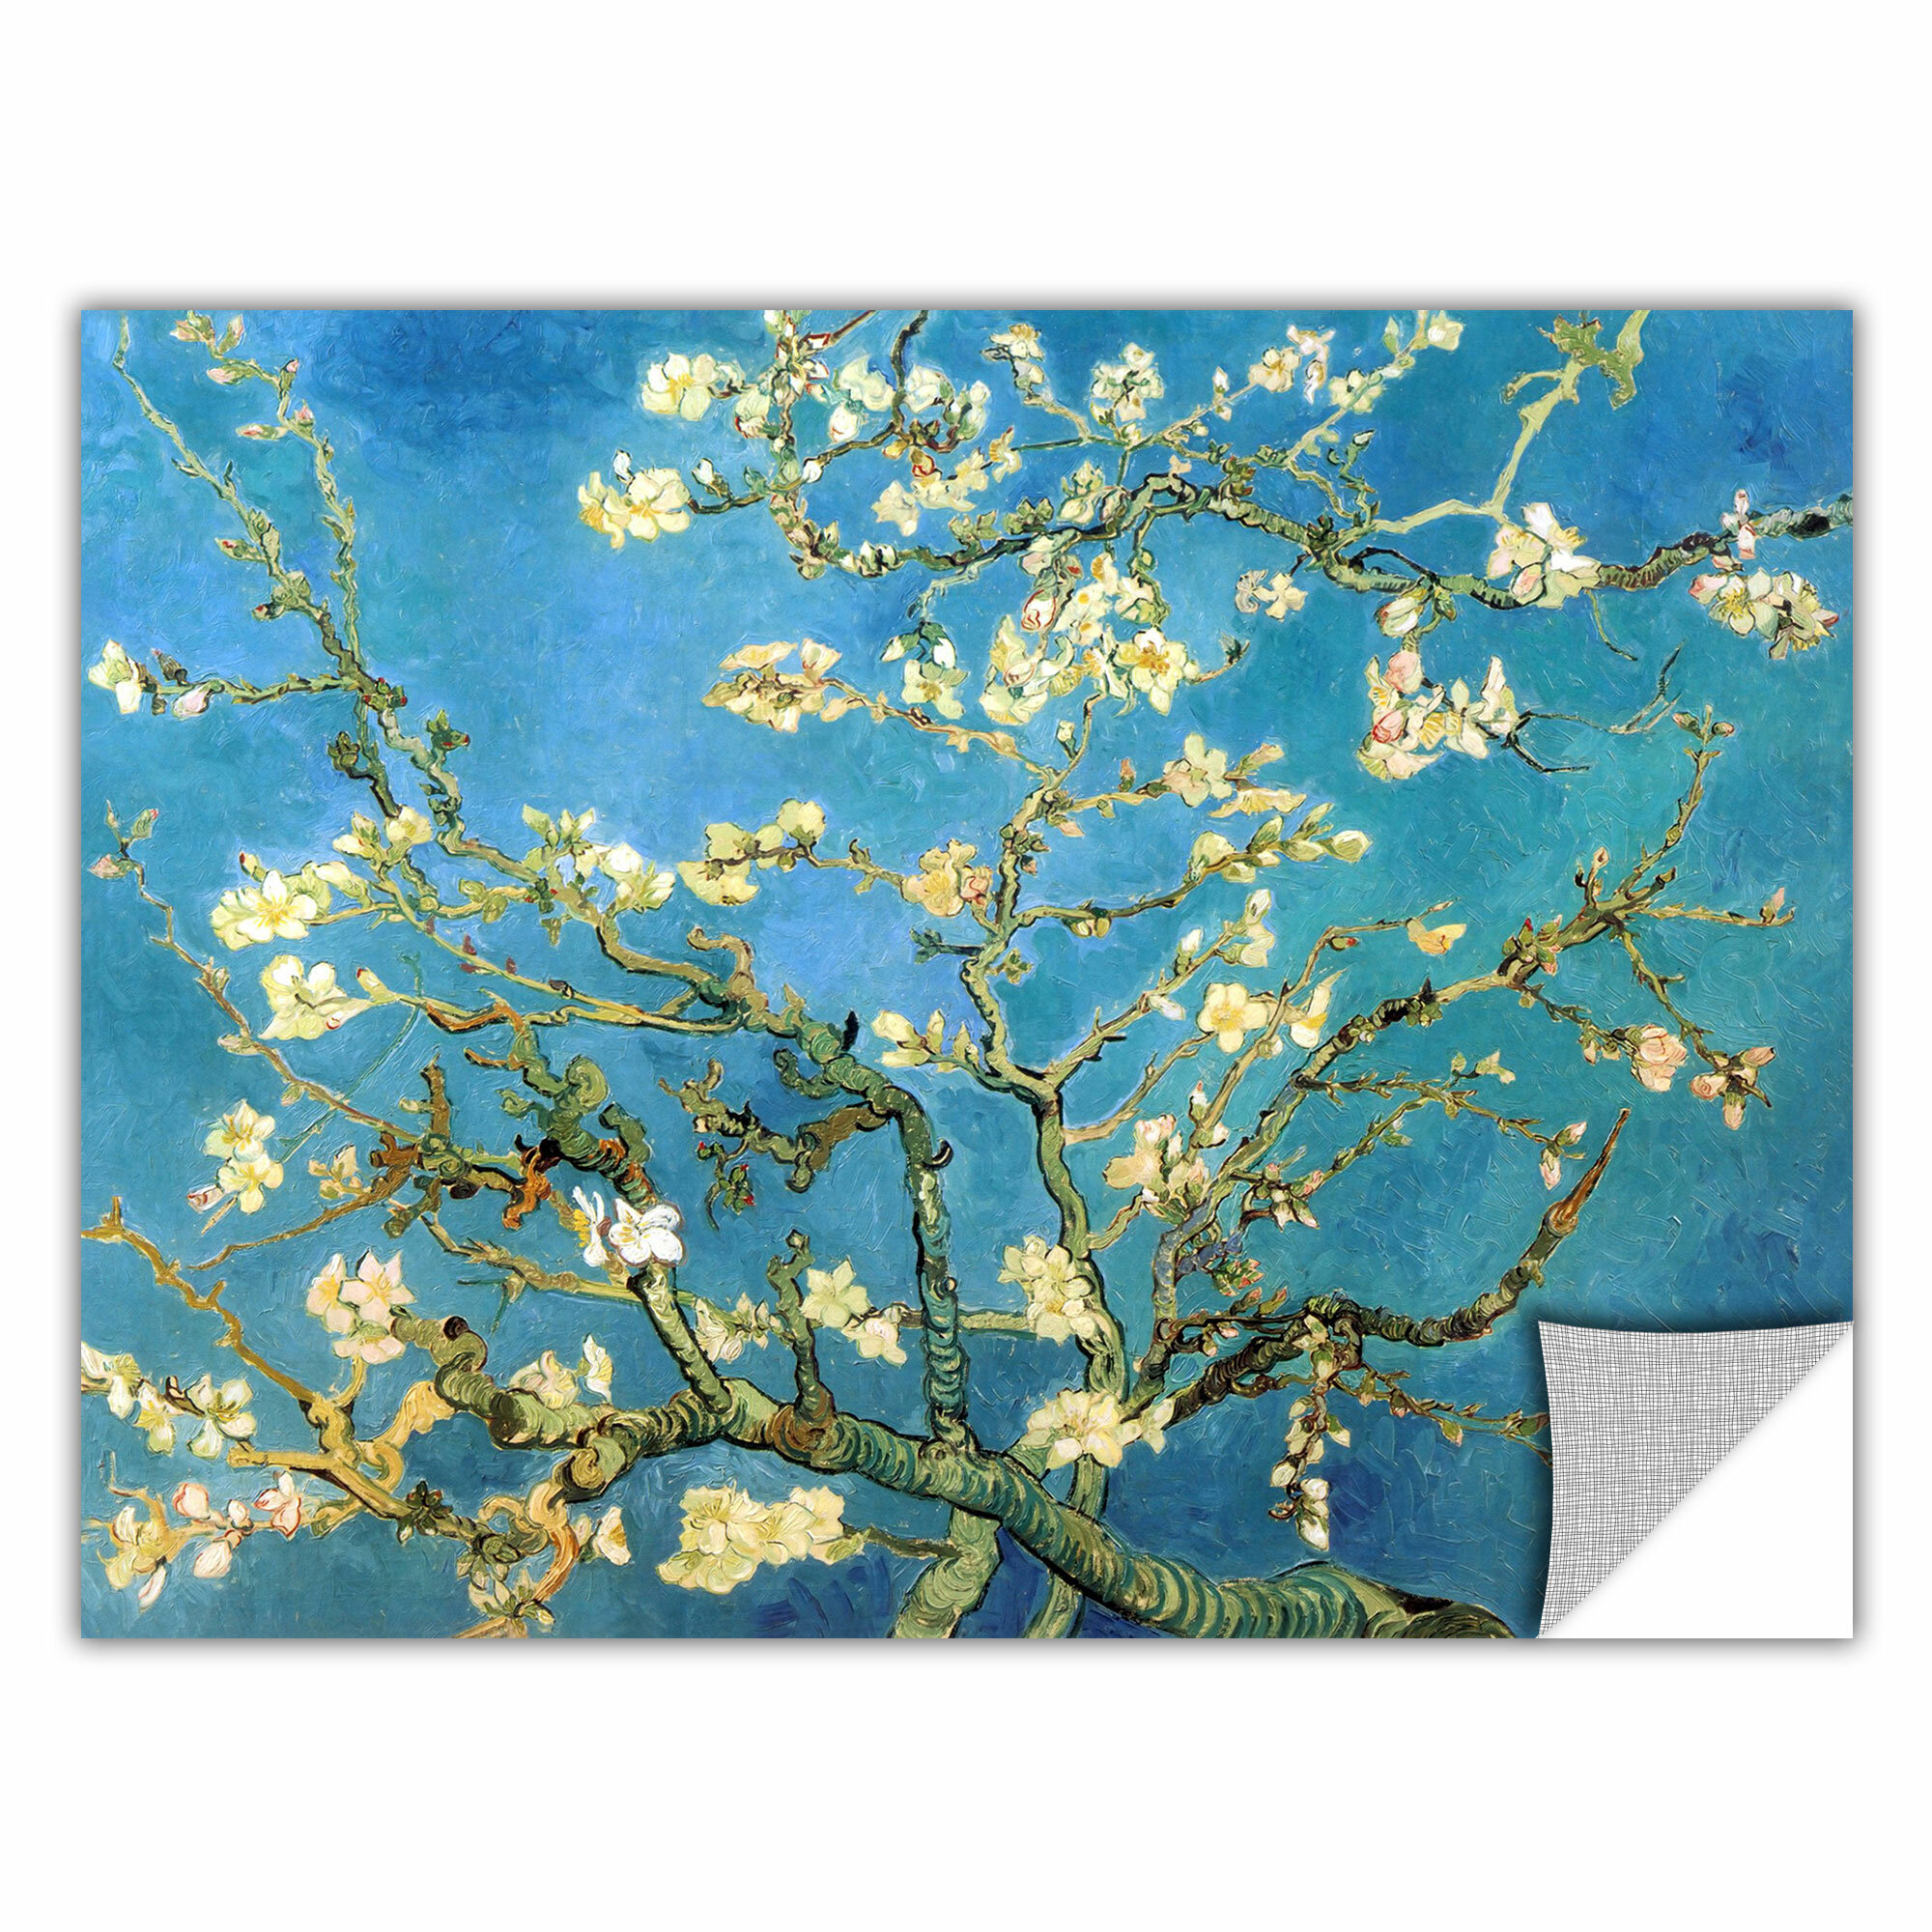 Details about   3D Van Gogh 776 Wall Stickers Vinyl Murals Wall Print Deco Art AJ STORE AU Lemon 